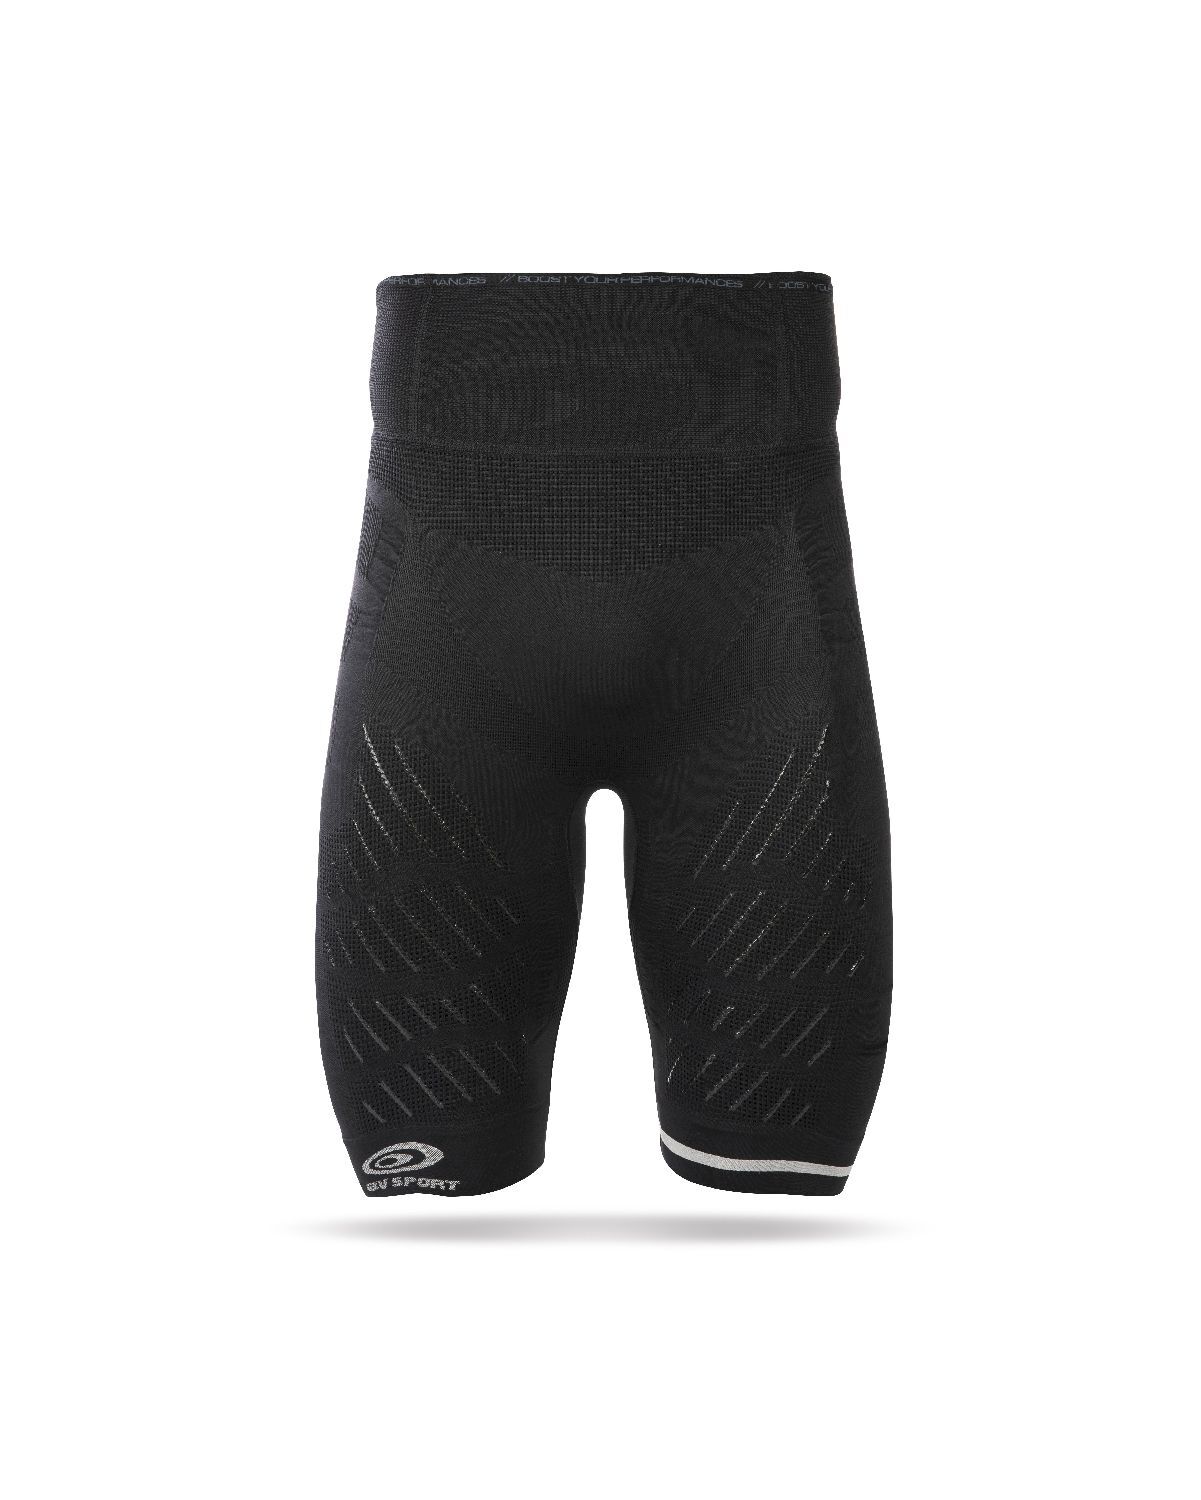 BV Sport CSX Evo2 Pro - Running shorts - Men's